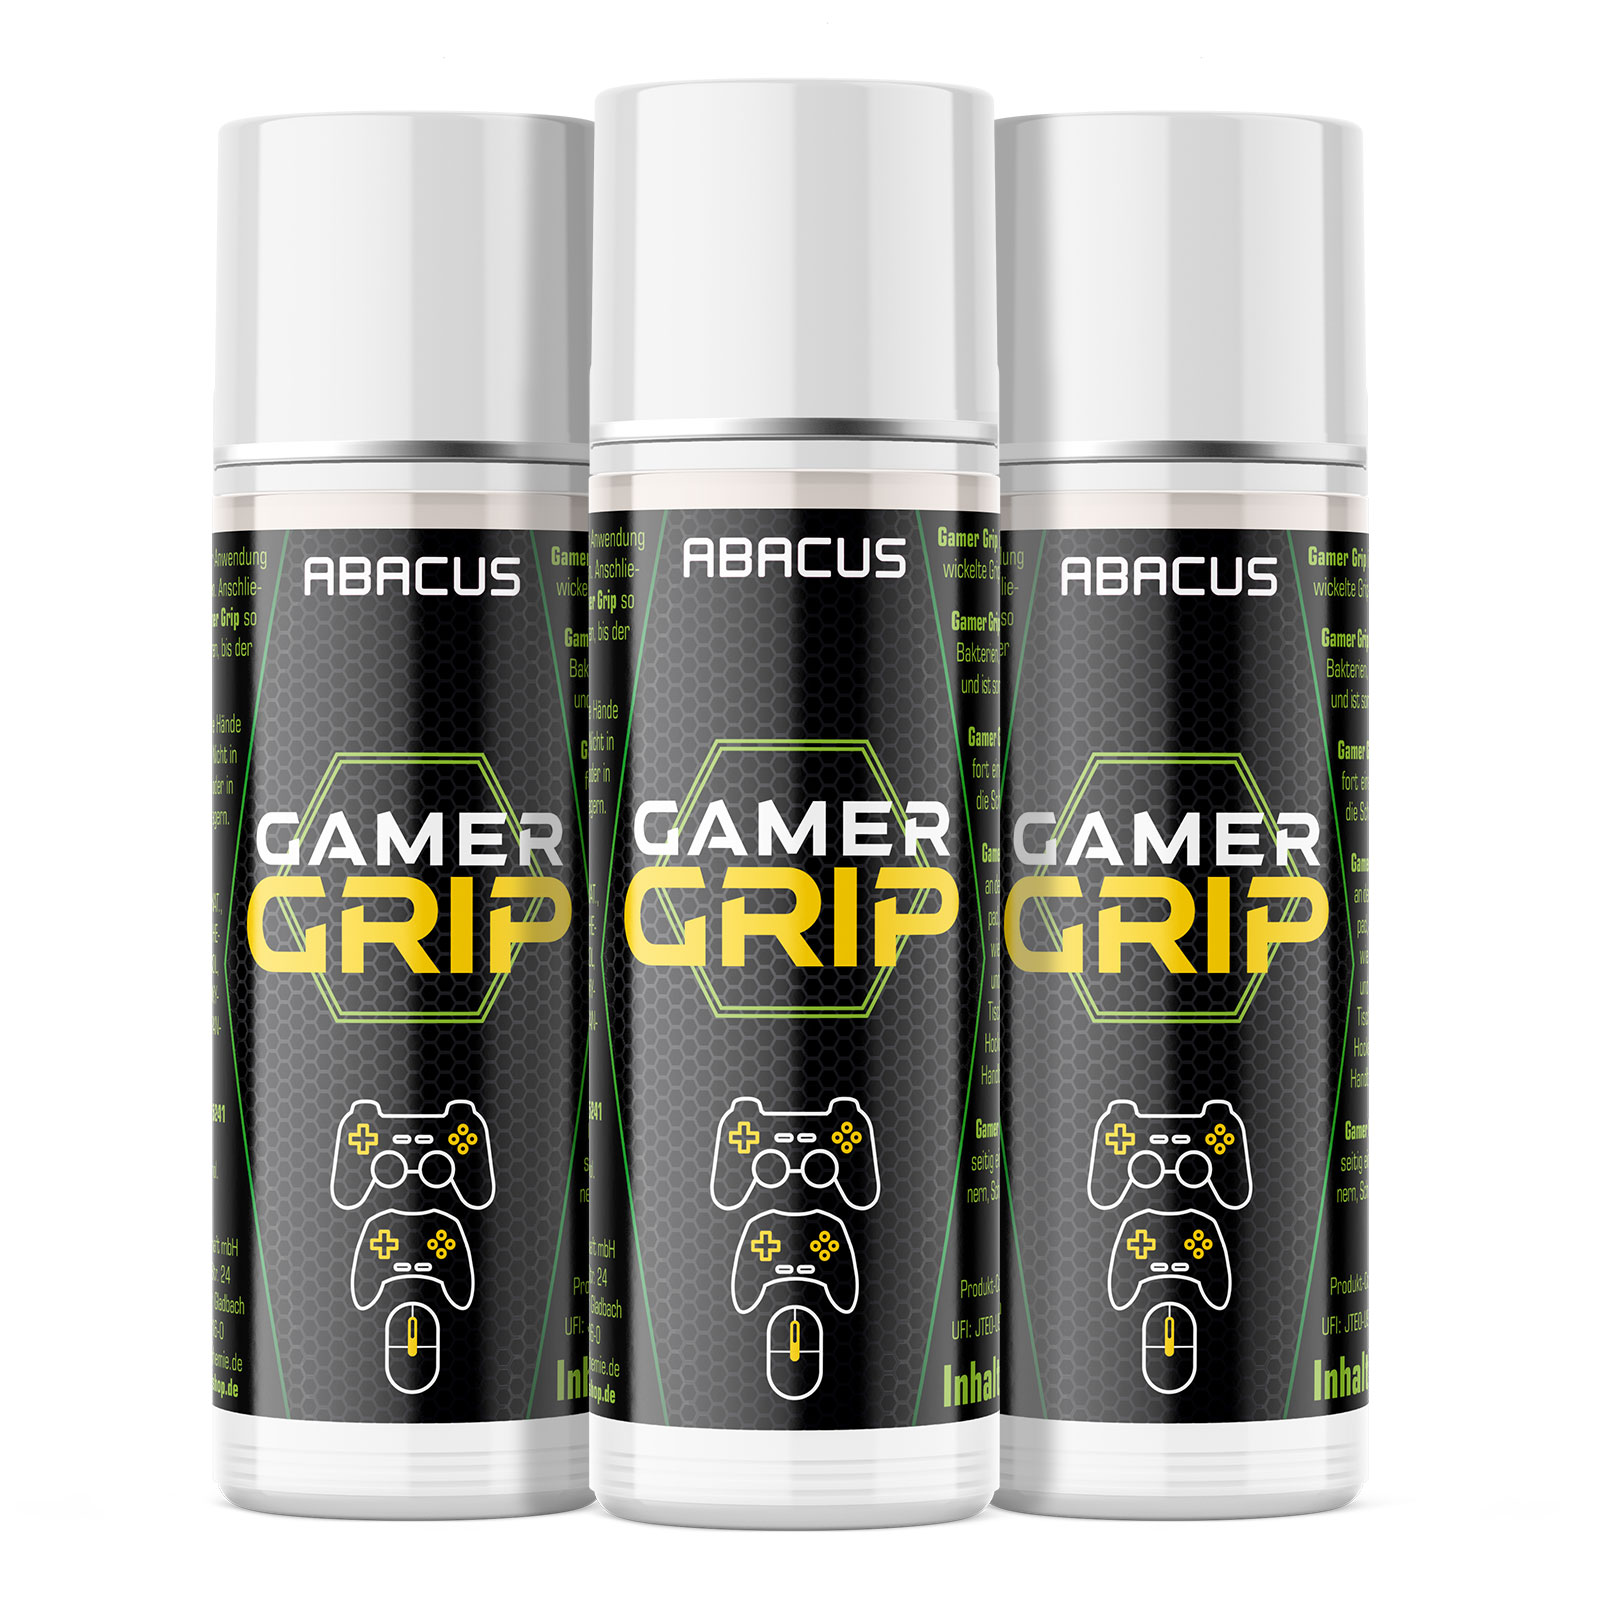  Gamer Grip, Gamergrip 50 ml 3er Set